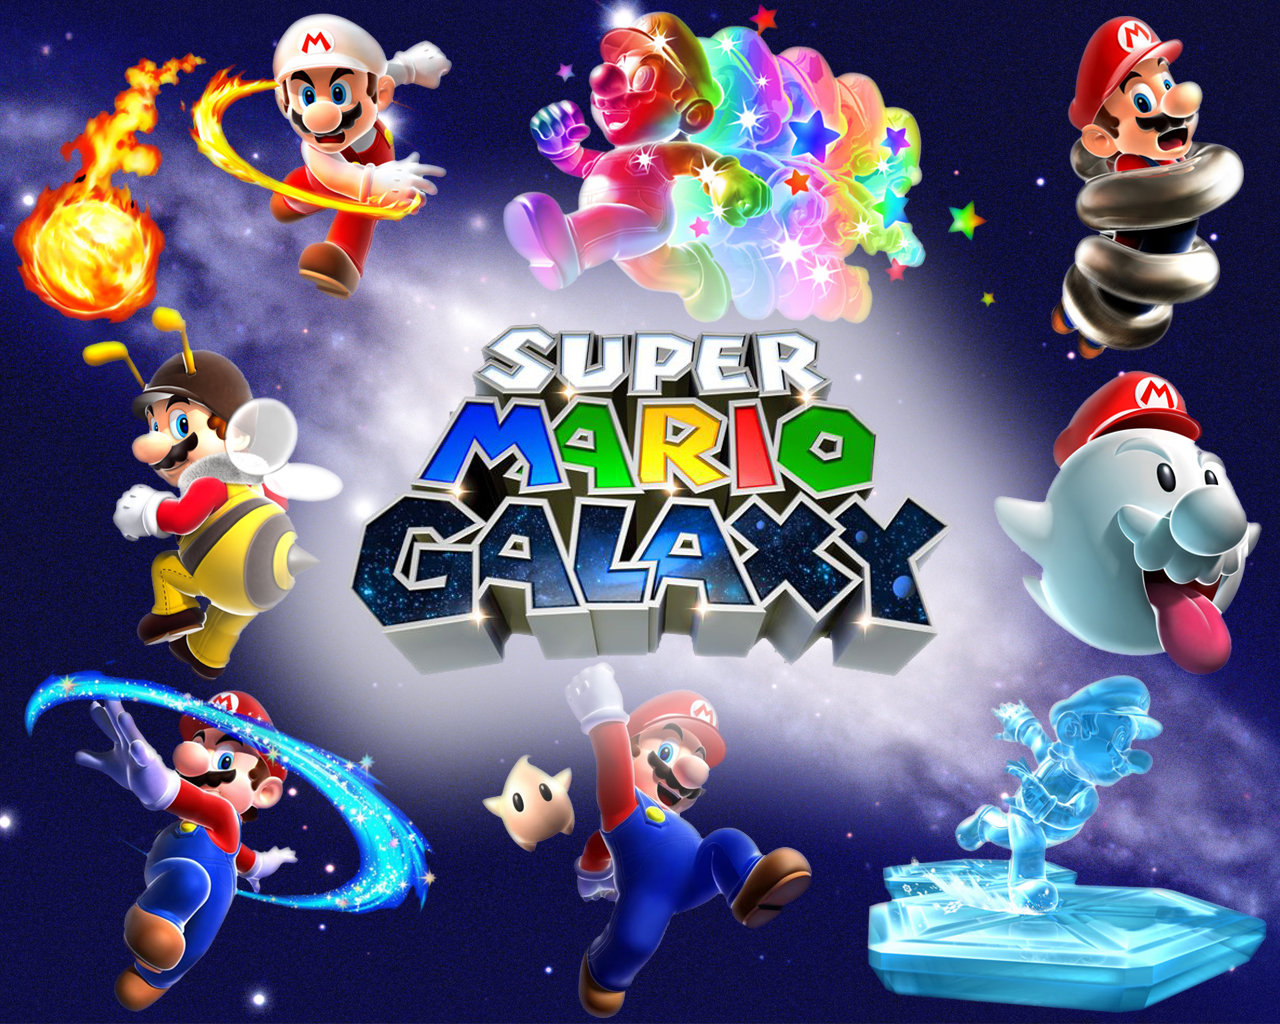 Free Download Super Mario Galaxy Desktop Wallpaper Hd [1280x1024] For